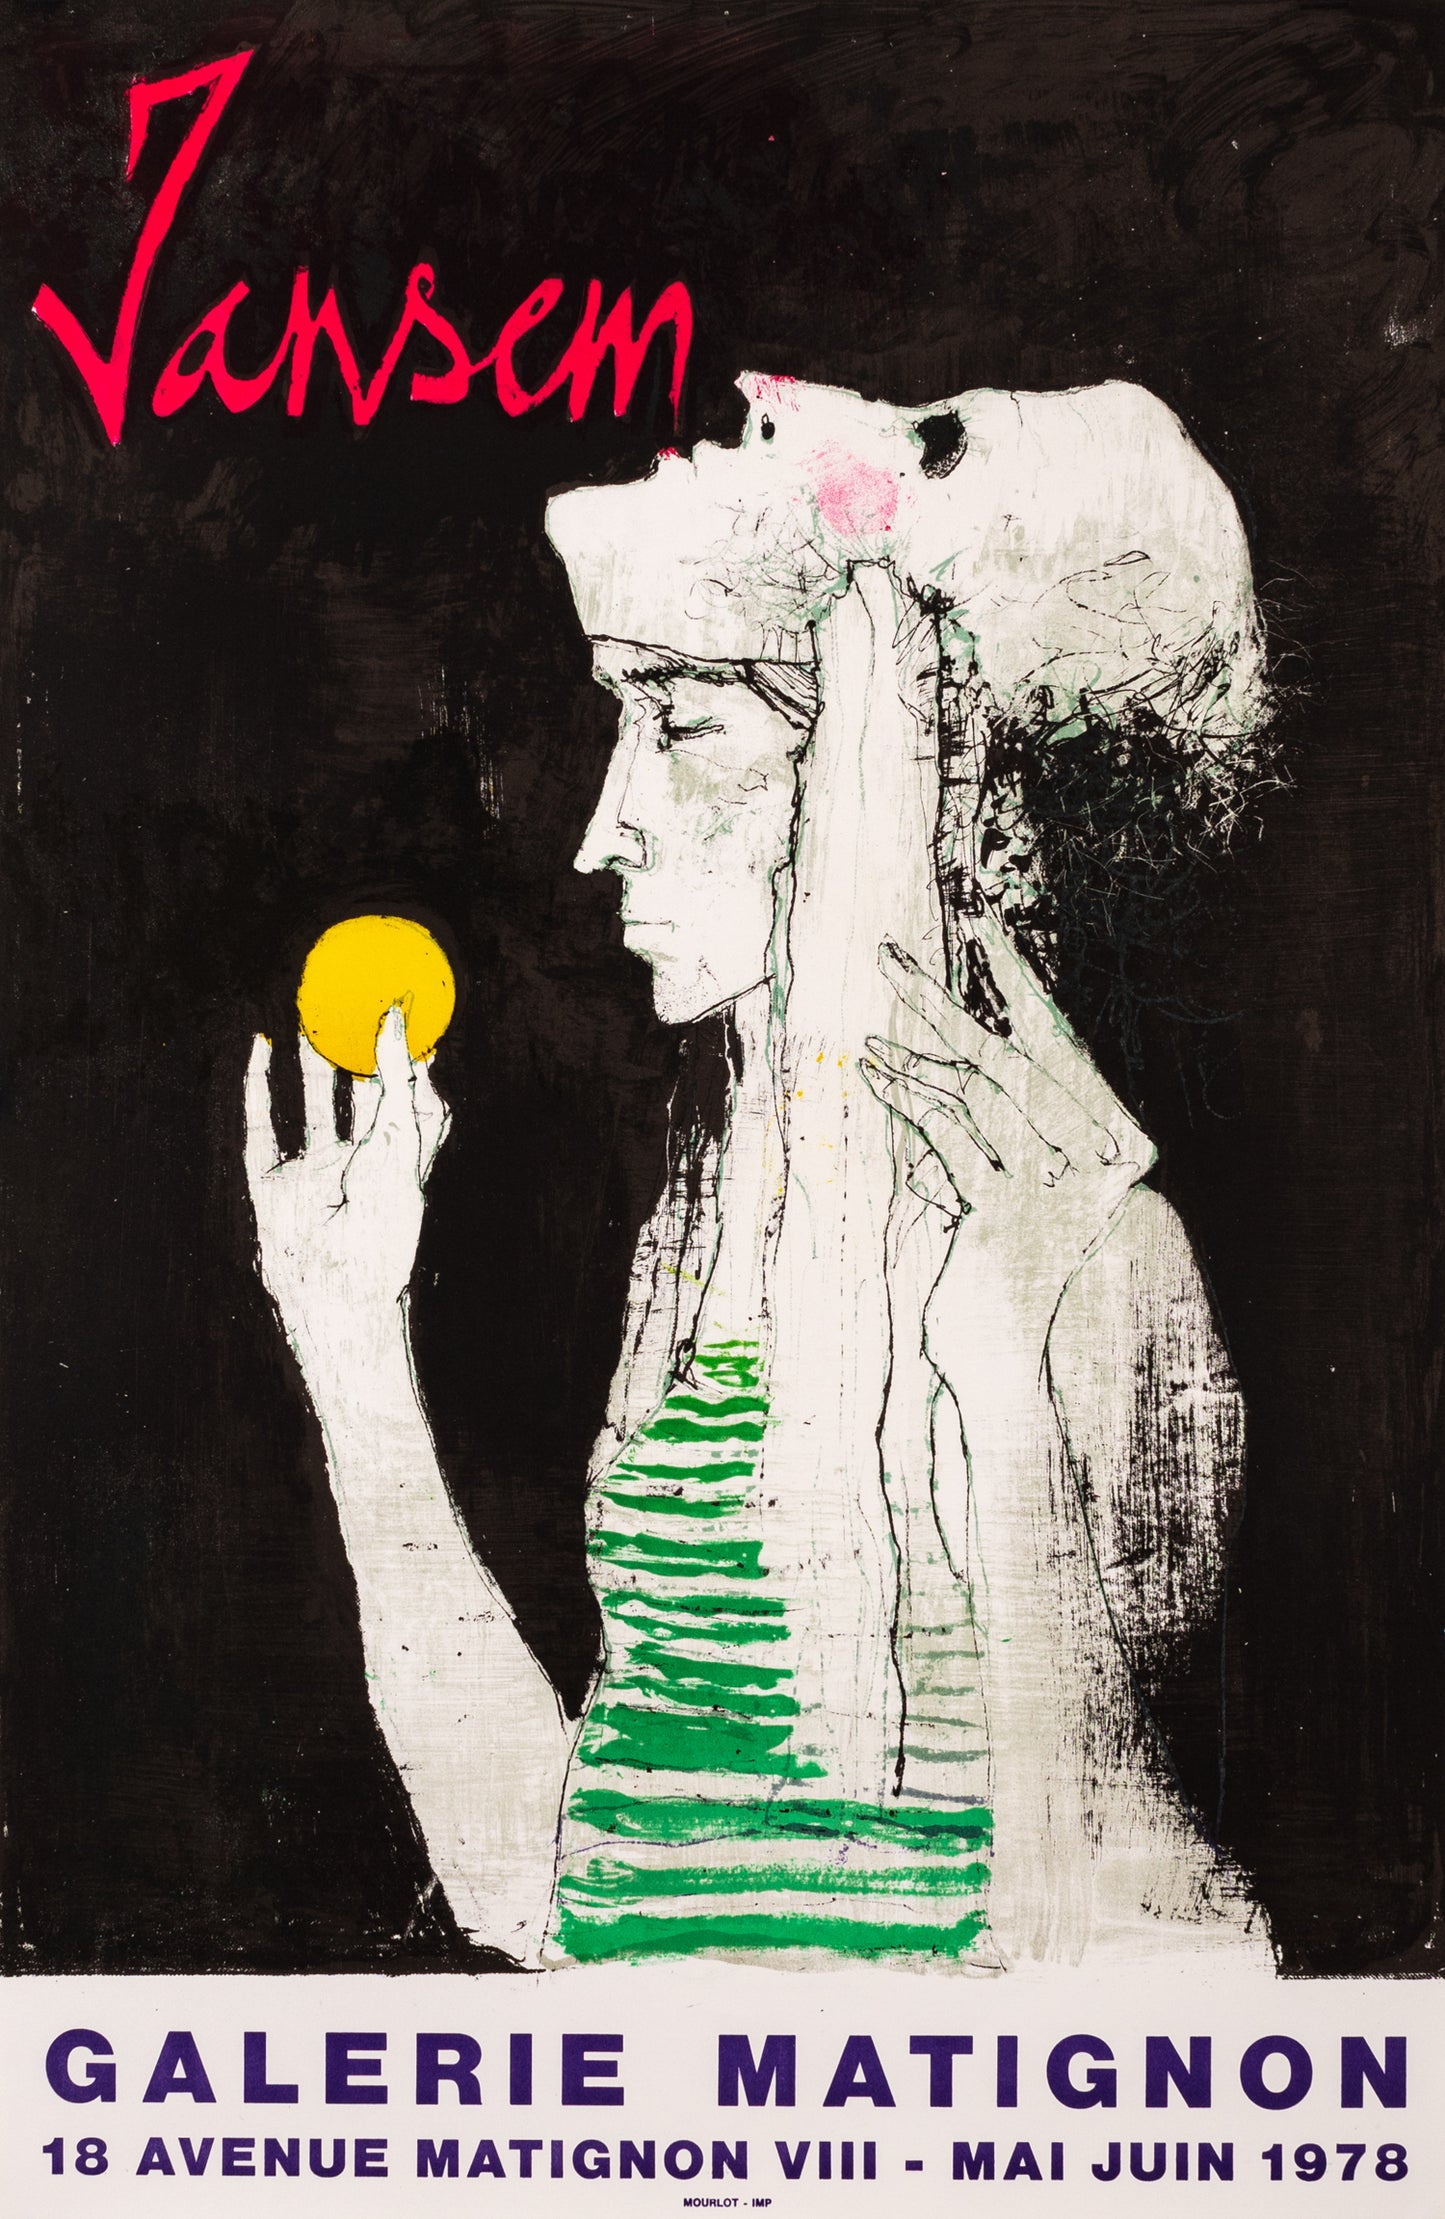 Jansem - Galerie Matignon by Jean Jansem, 1978 - Mourlot Editions - Fine_Art - Poster - Lithograph - Wall Art - Vintage - Prints - Original